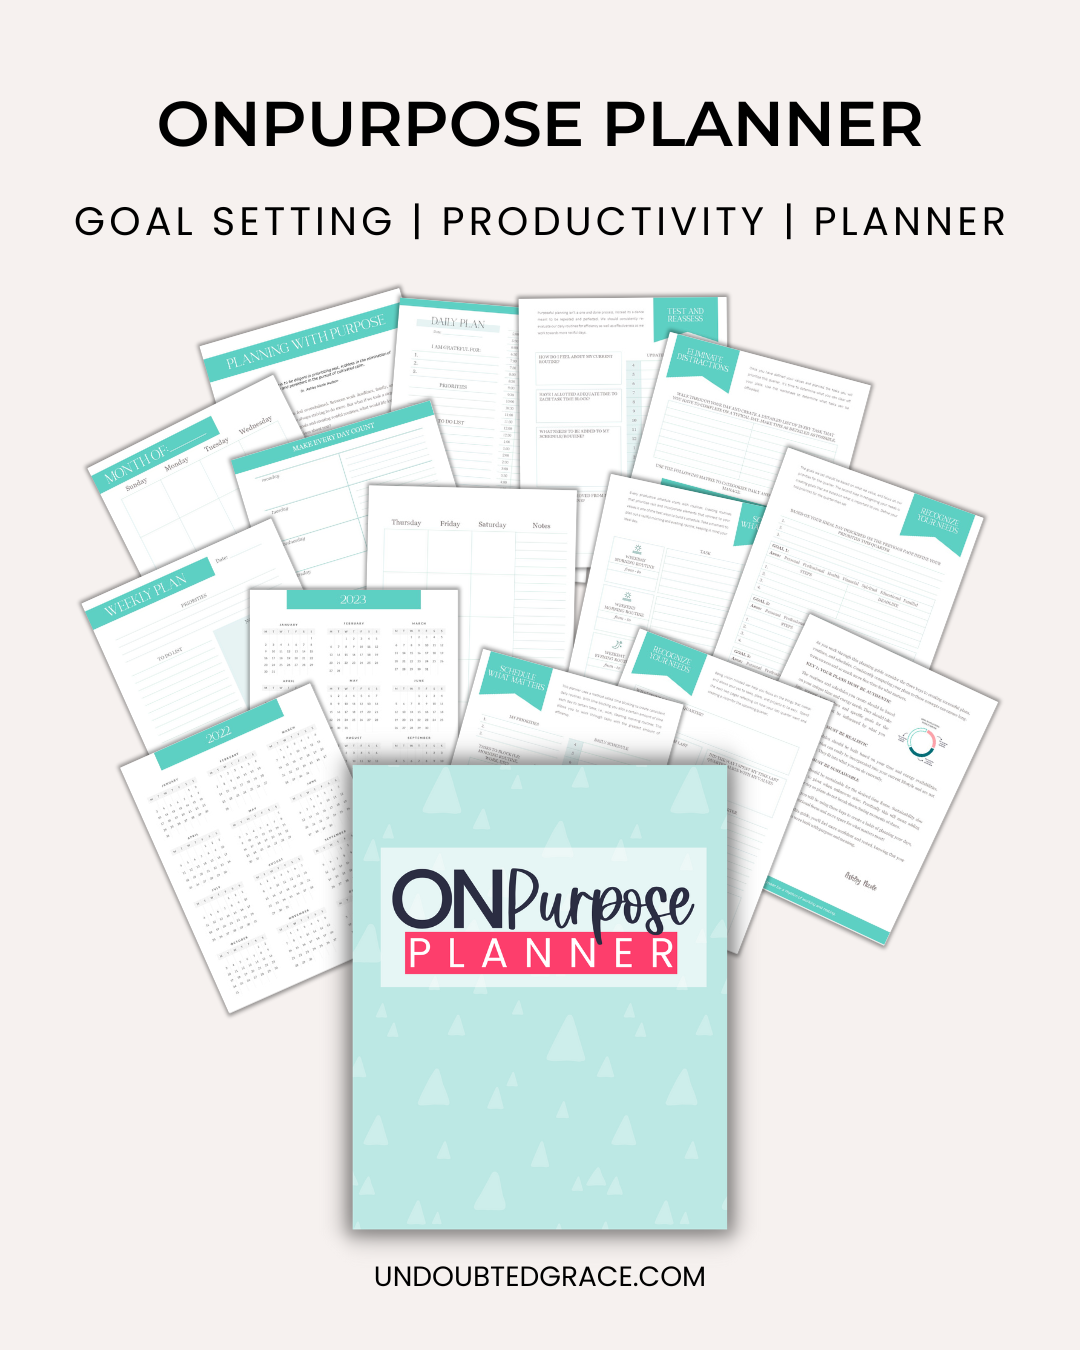 ONPurpose Planner